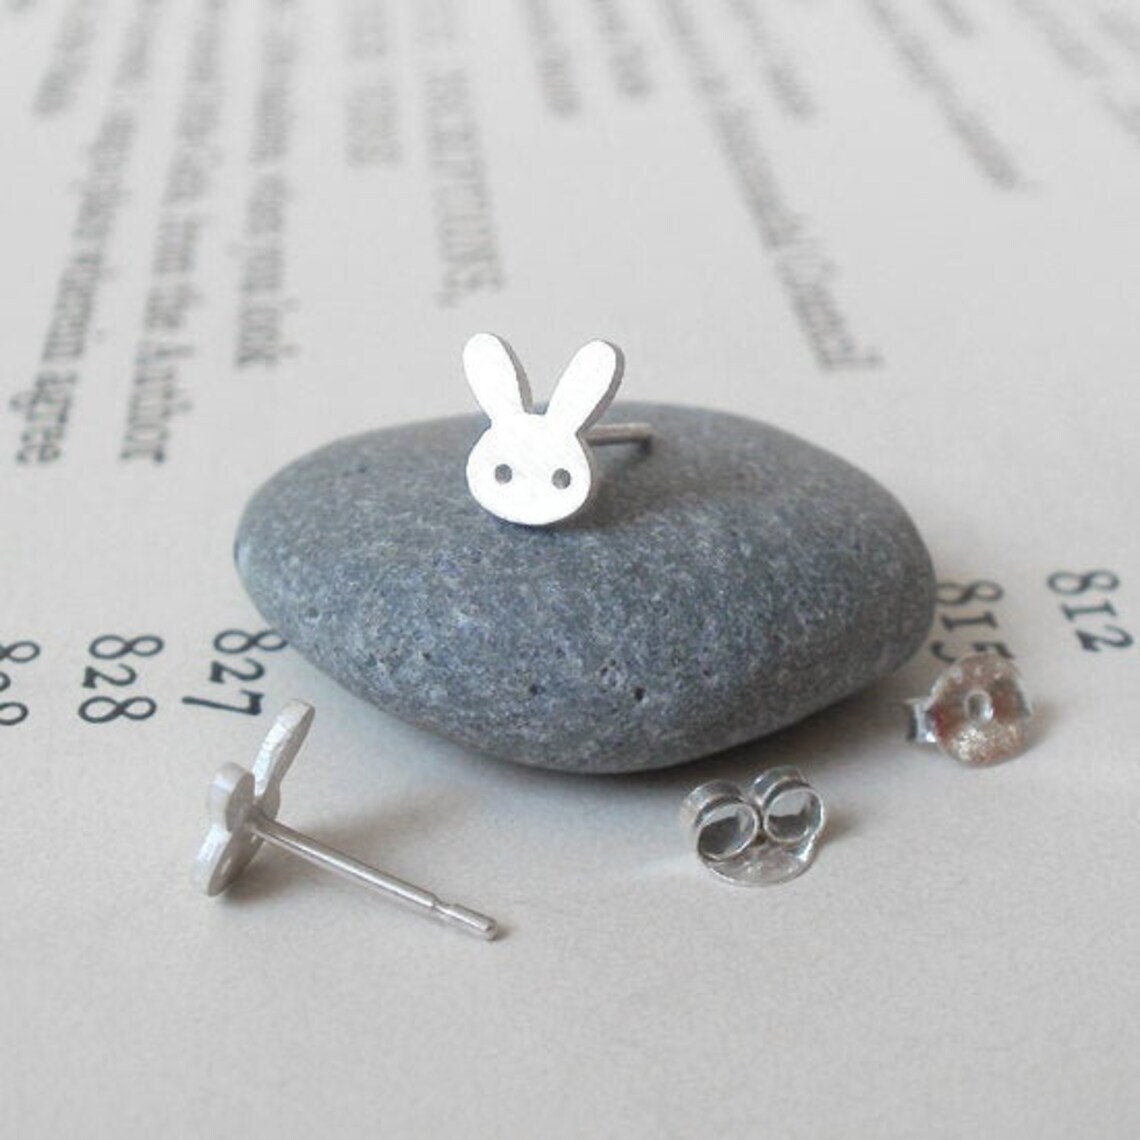 Bunny Stud Earrings with Straight Ears, Silver Rabbit Ear Posts